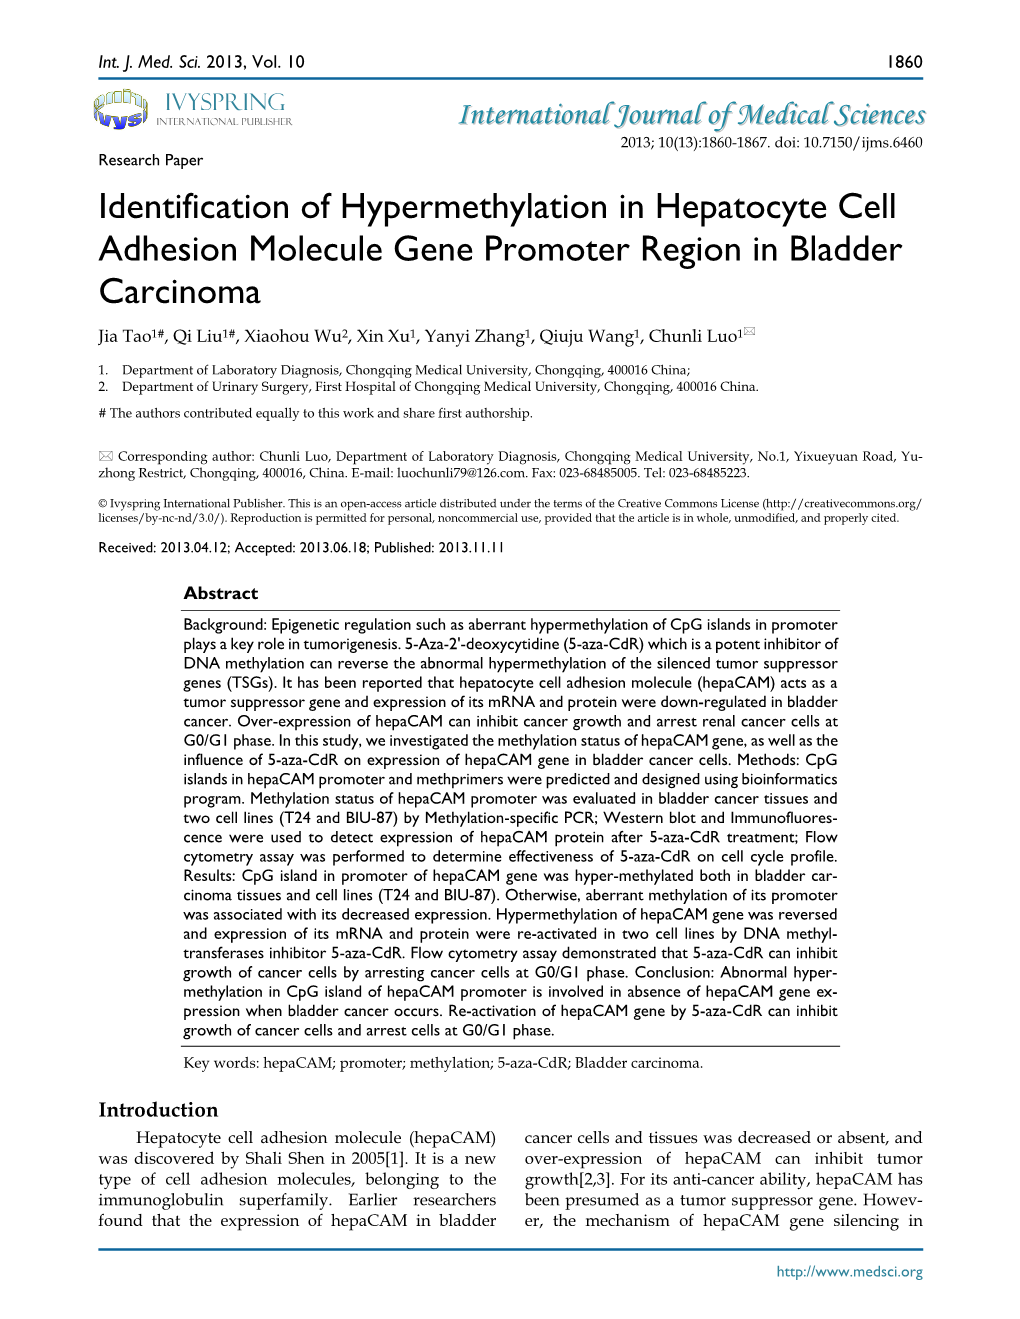 Identification of Hypermethylation in Hepatocyte Cell Adhesion Molecule Gene Promoter Region in Bladder Carcinoma